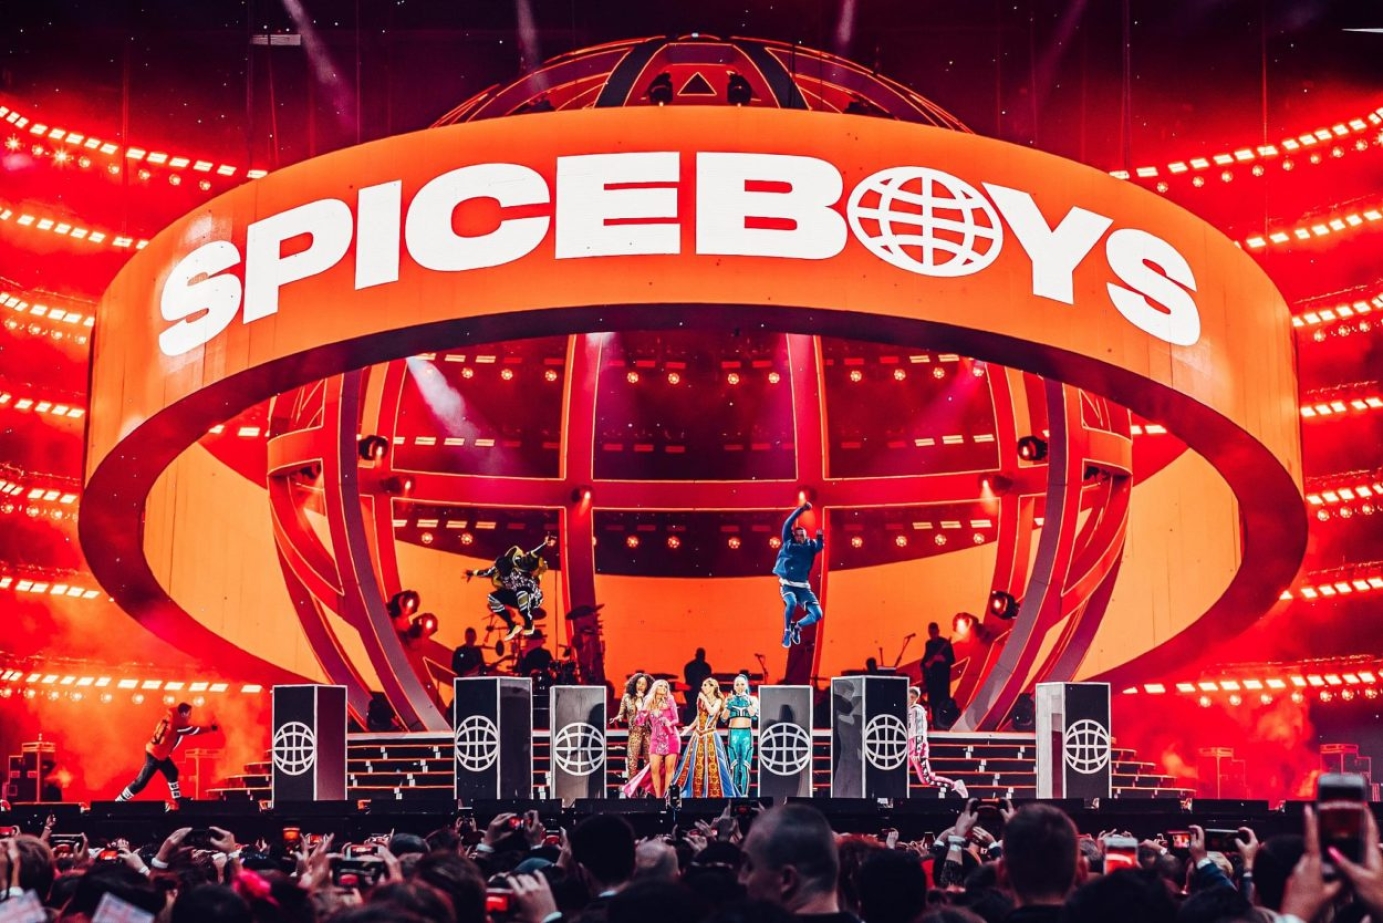 Spice Girls Live Show 2019